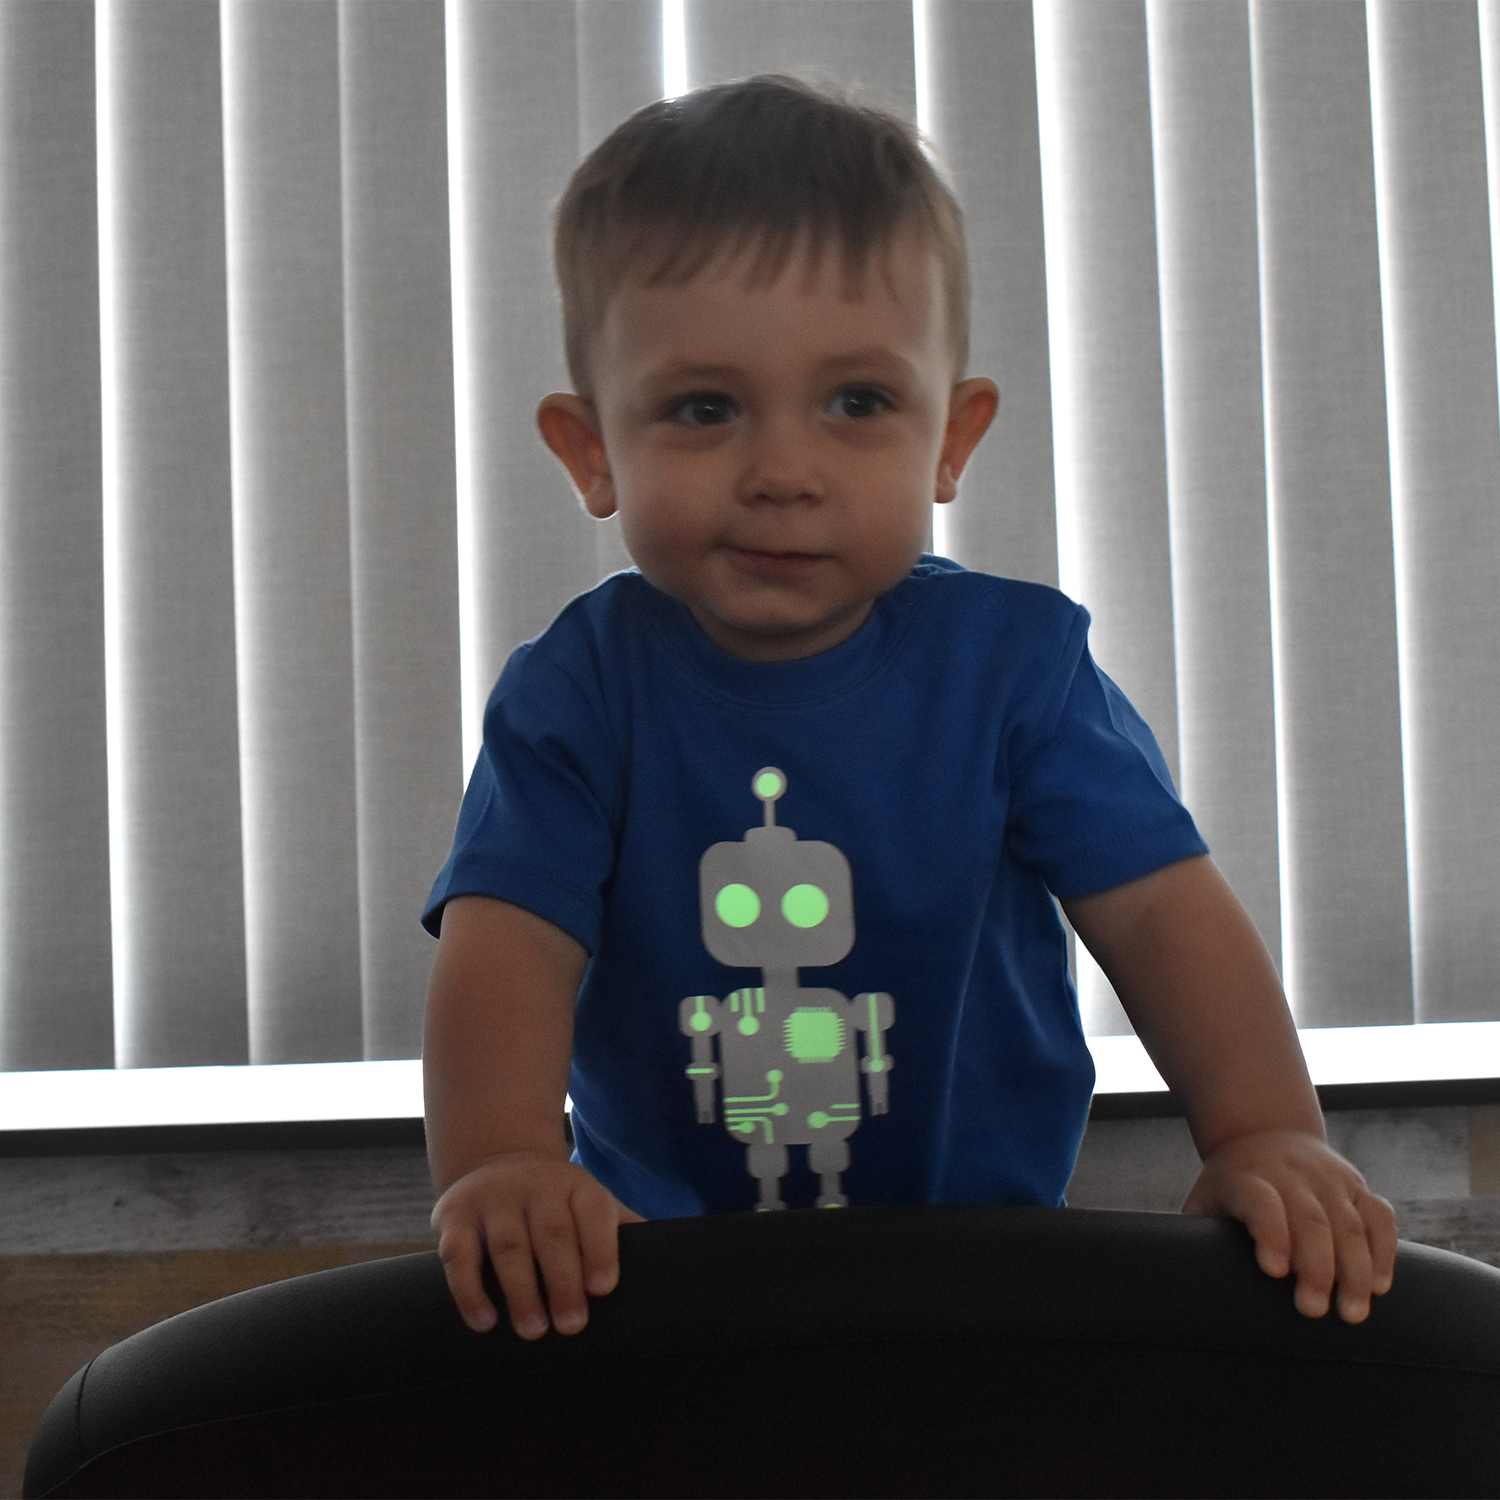 Robot glow in the dark baby shortsleeve shirt